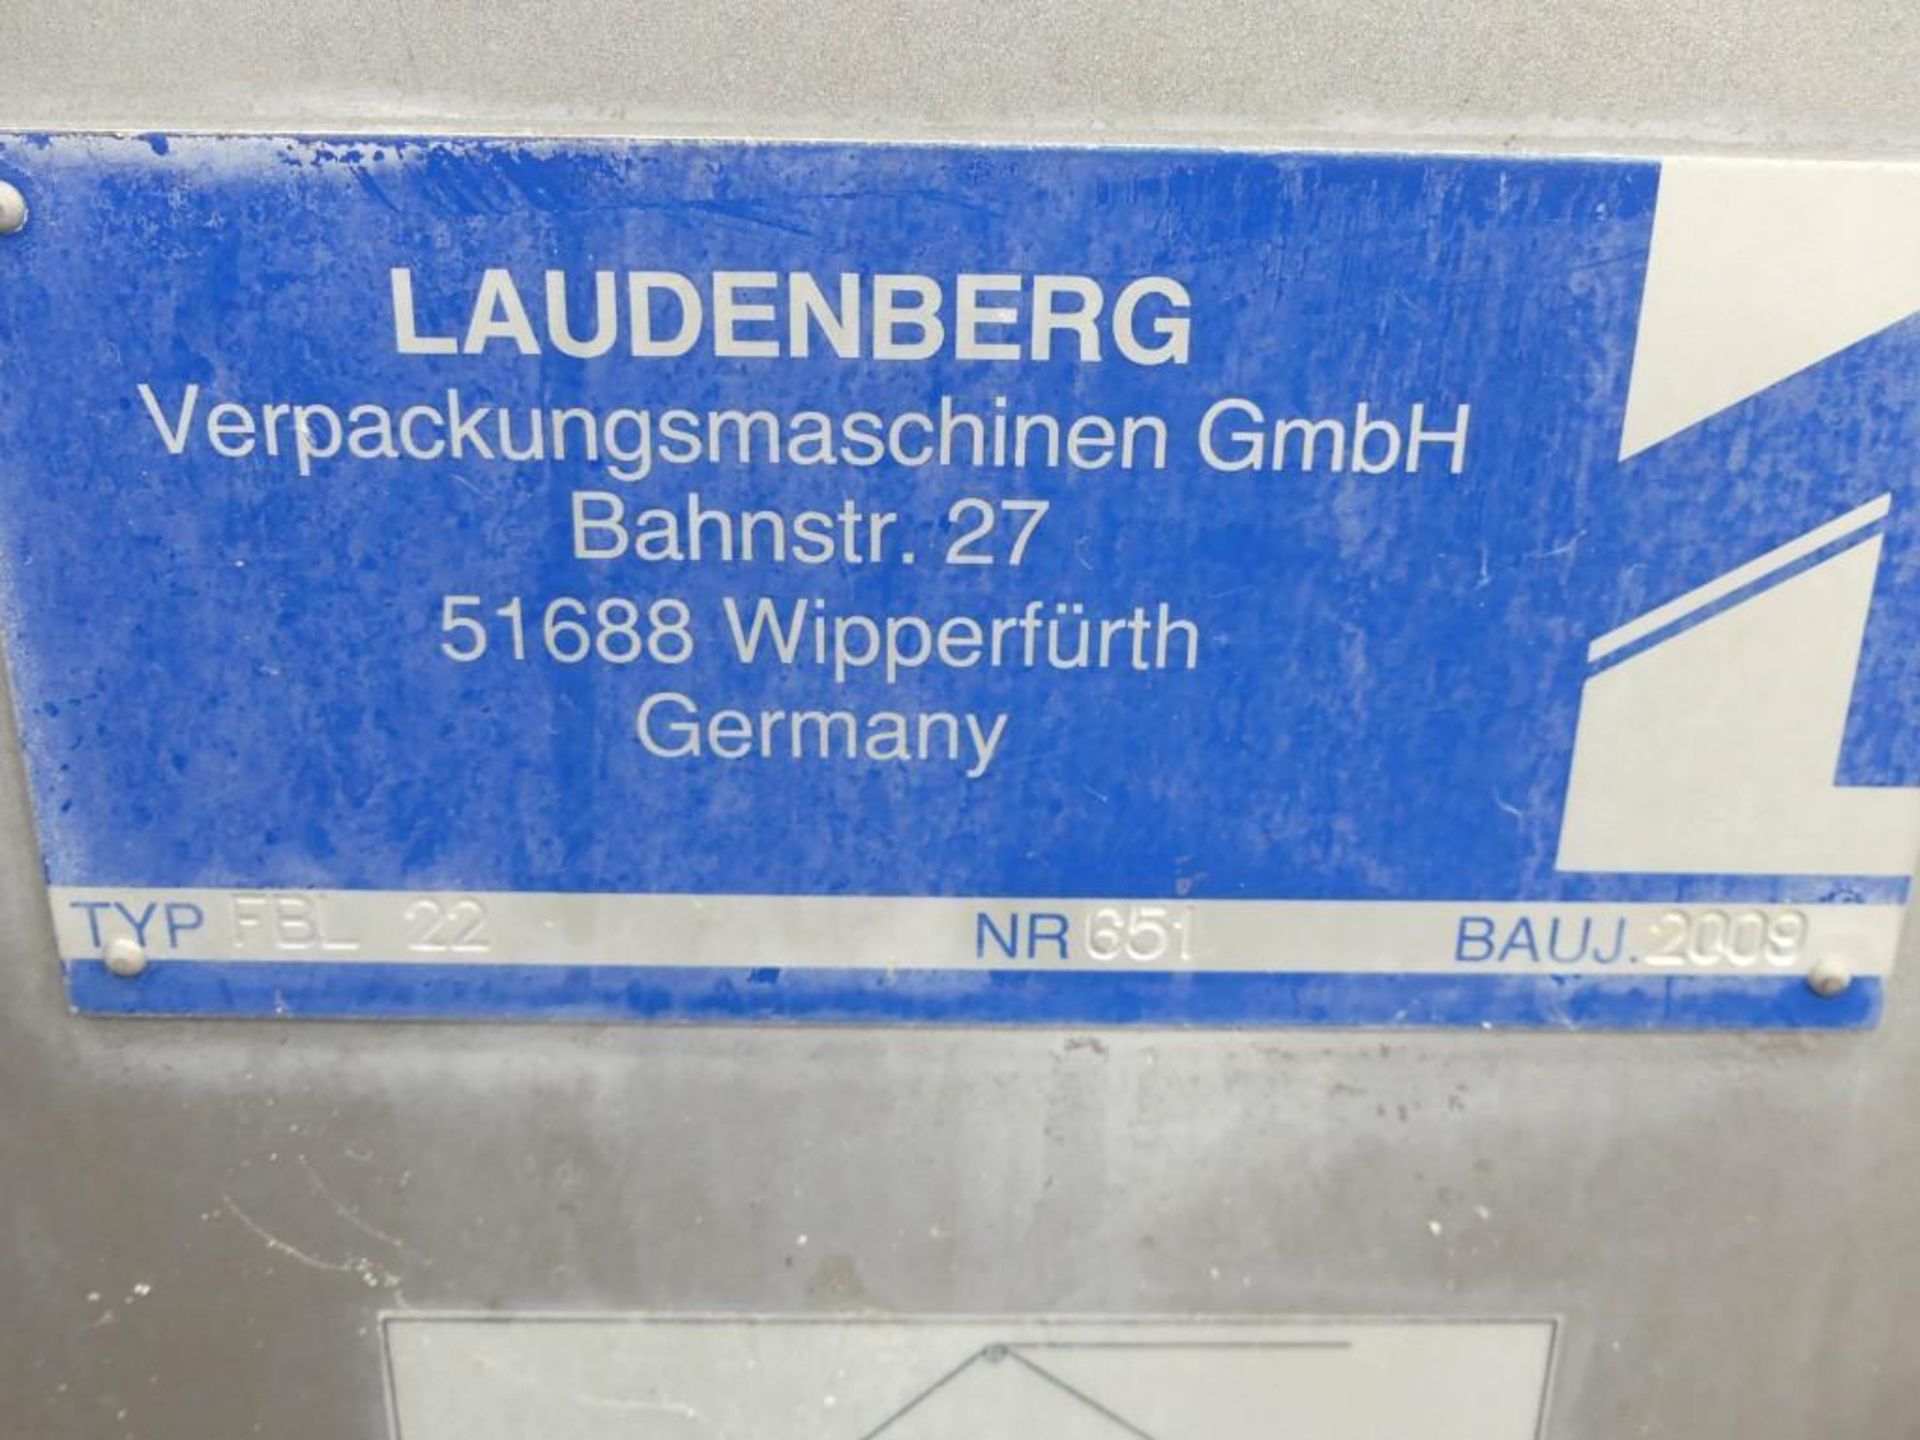 Laudenberg FBL 22 HFFS Pouch Machine with Zipper - Image 128 of 128